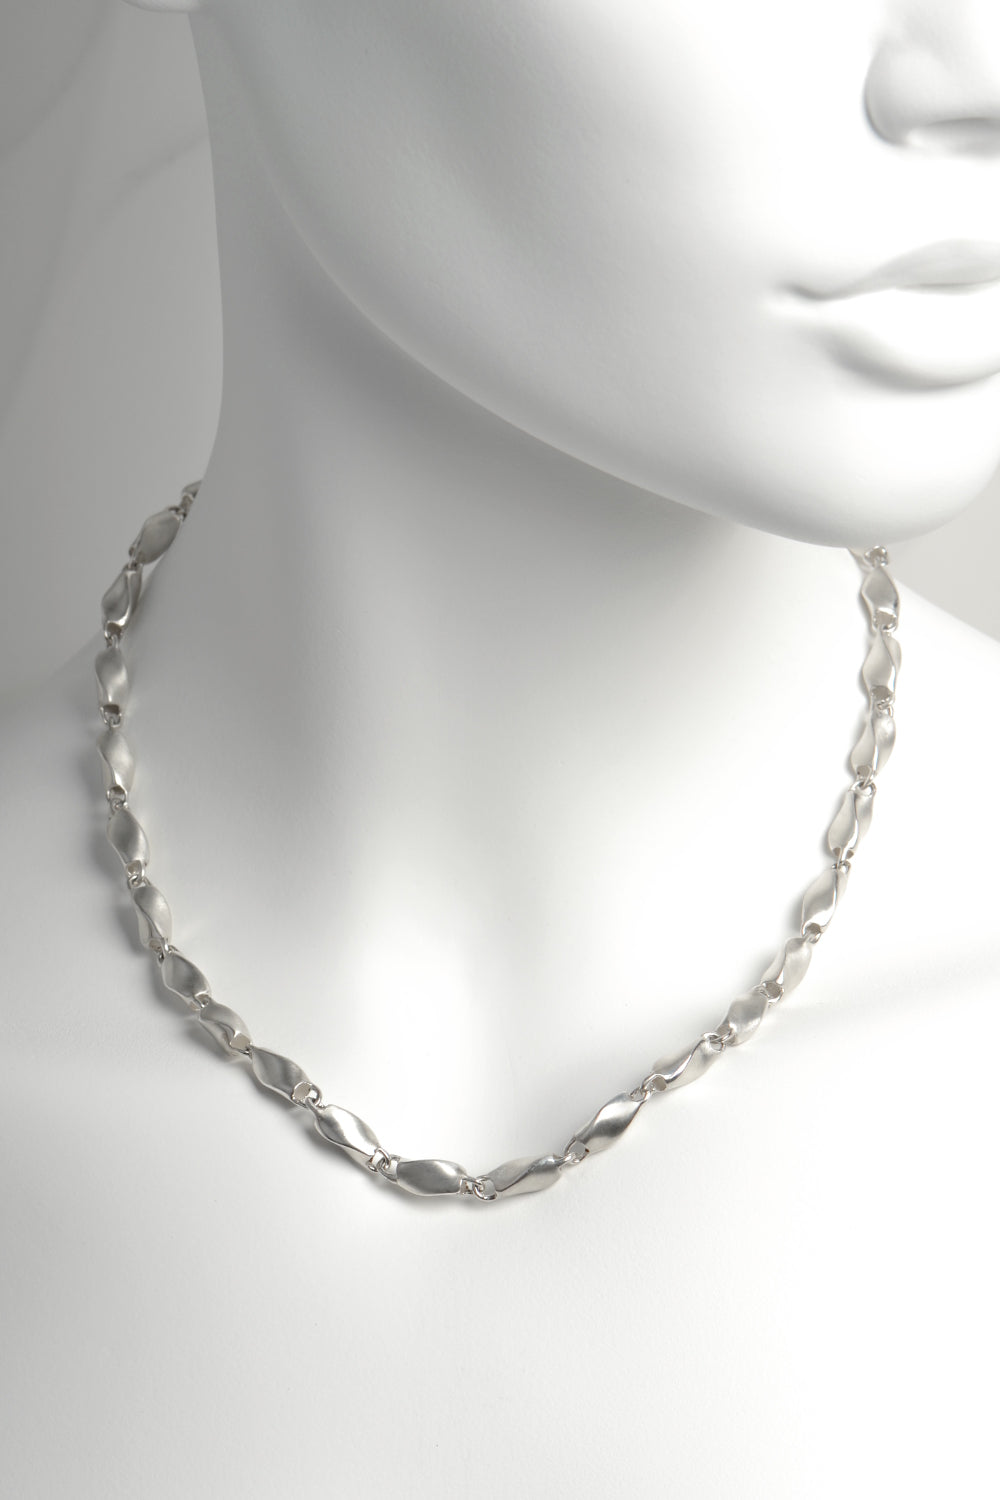 Handmade silver twist chain collar